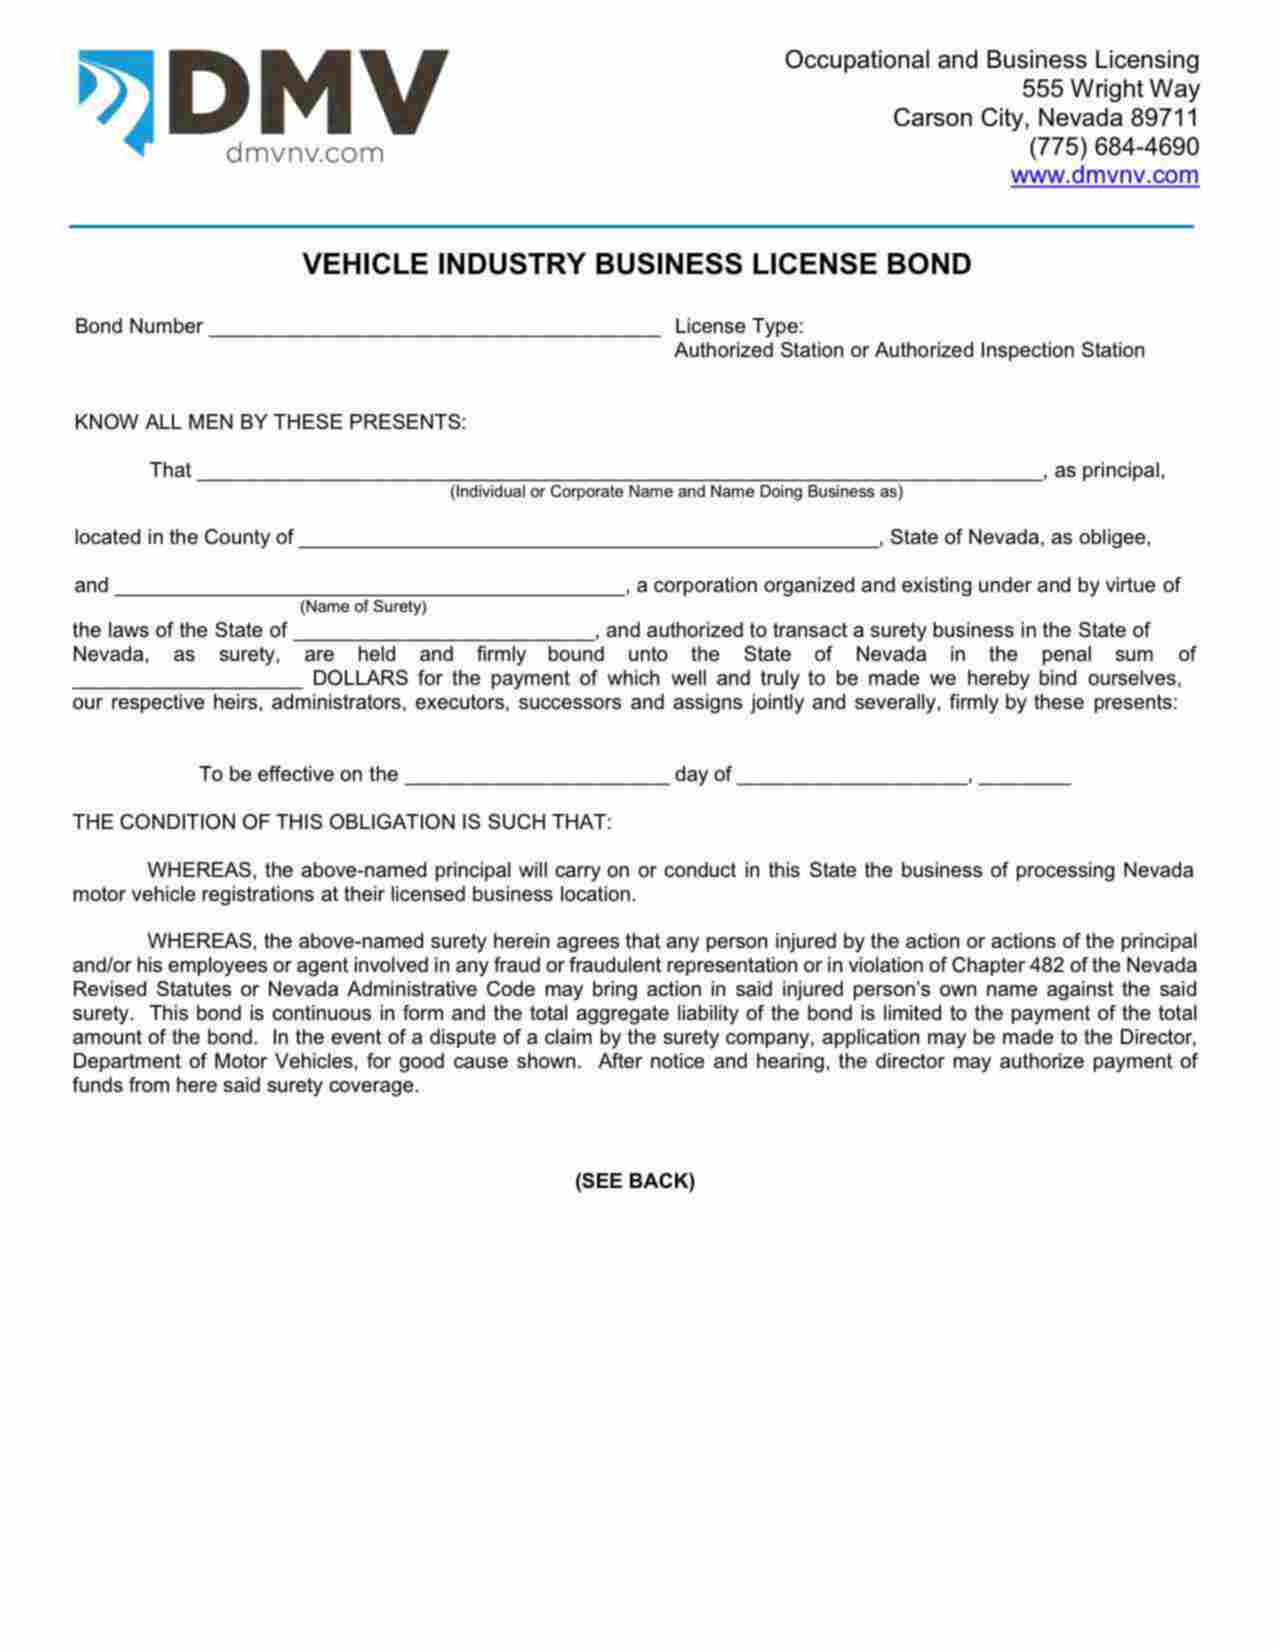 Nevada Authorized Station or Authorized Inspection Station Bond Form